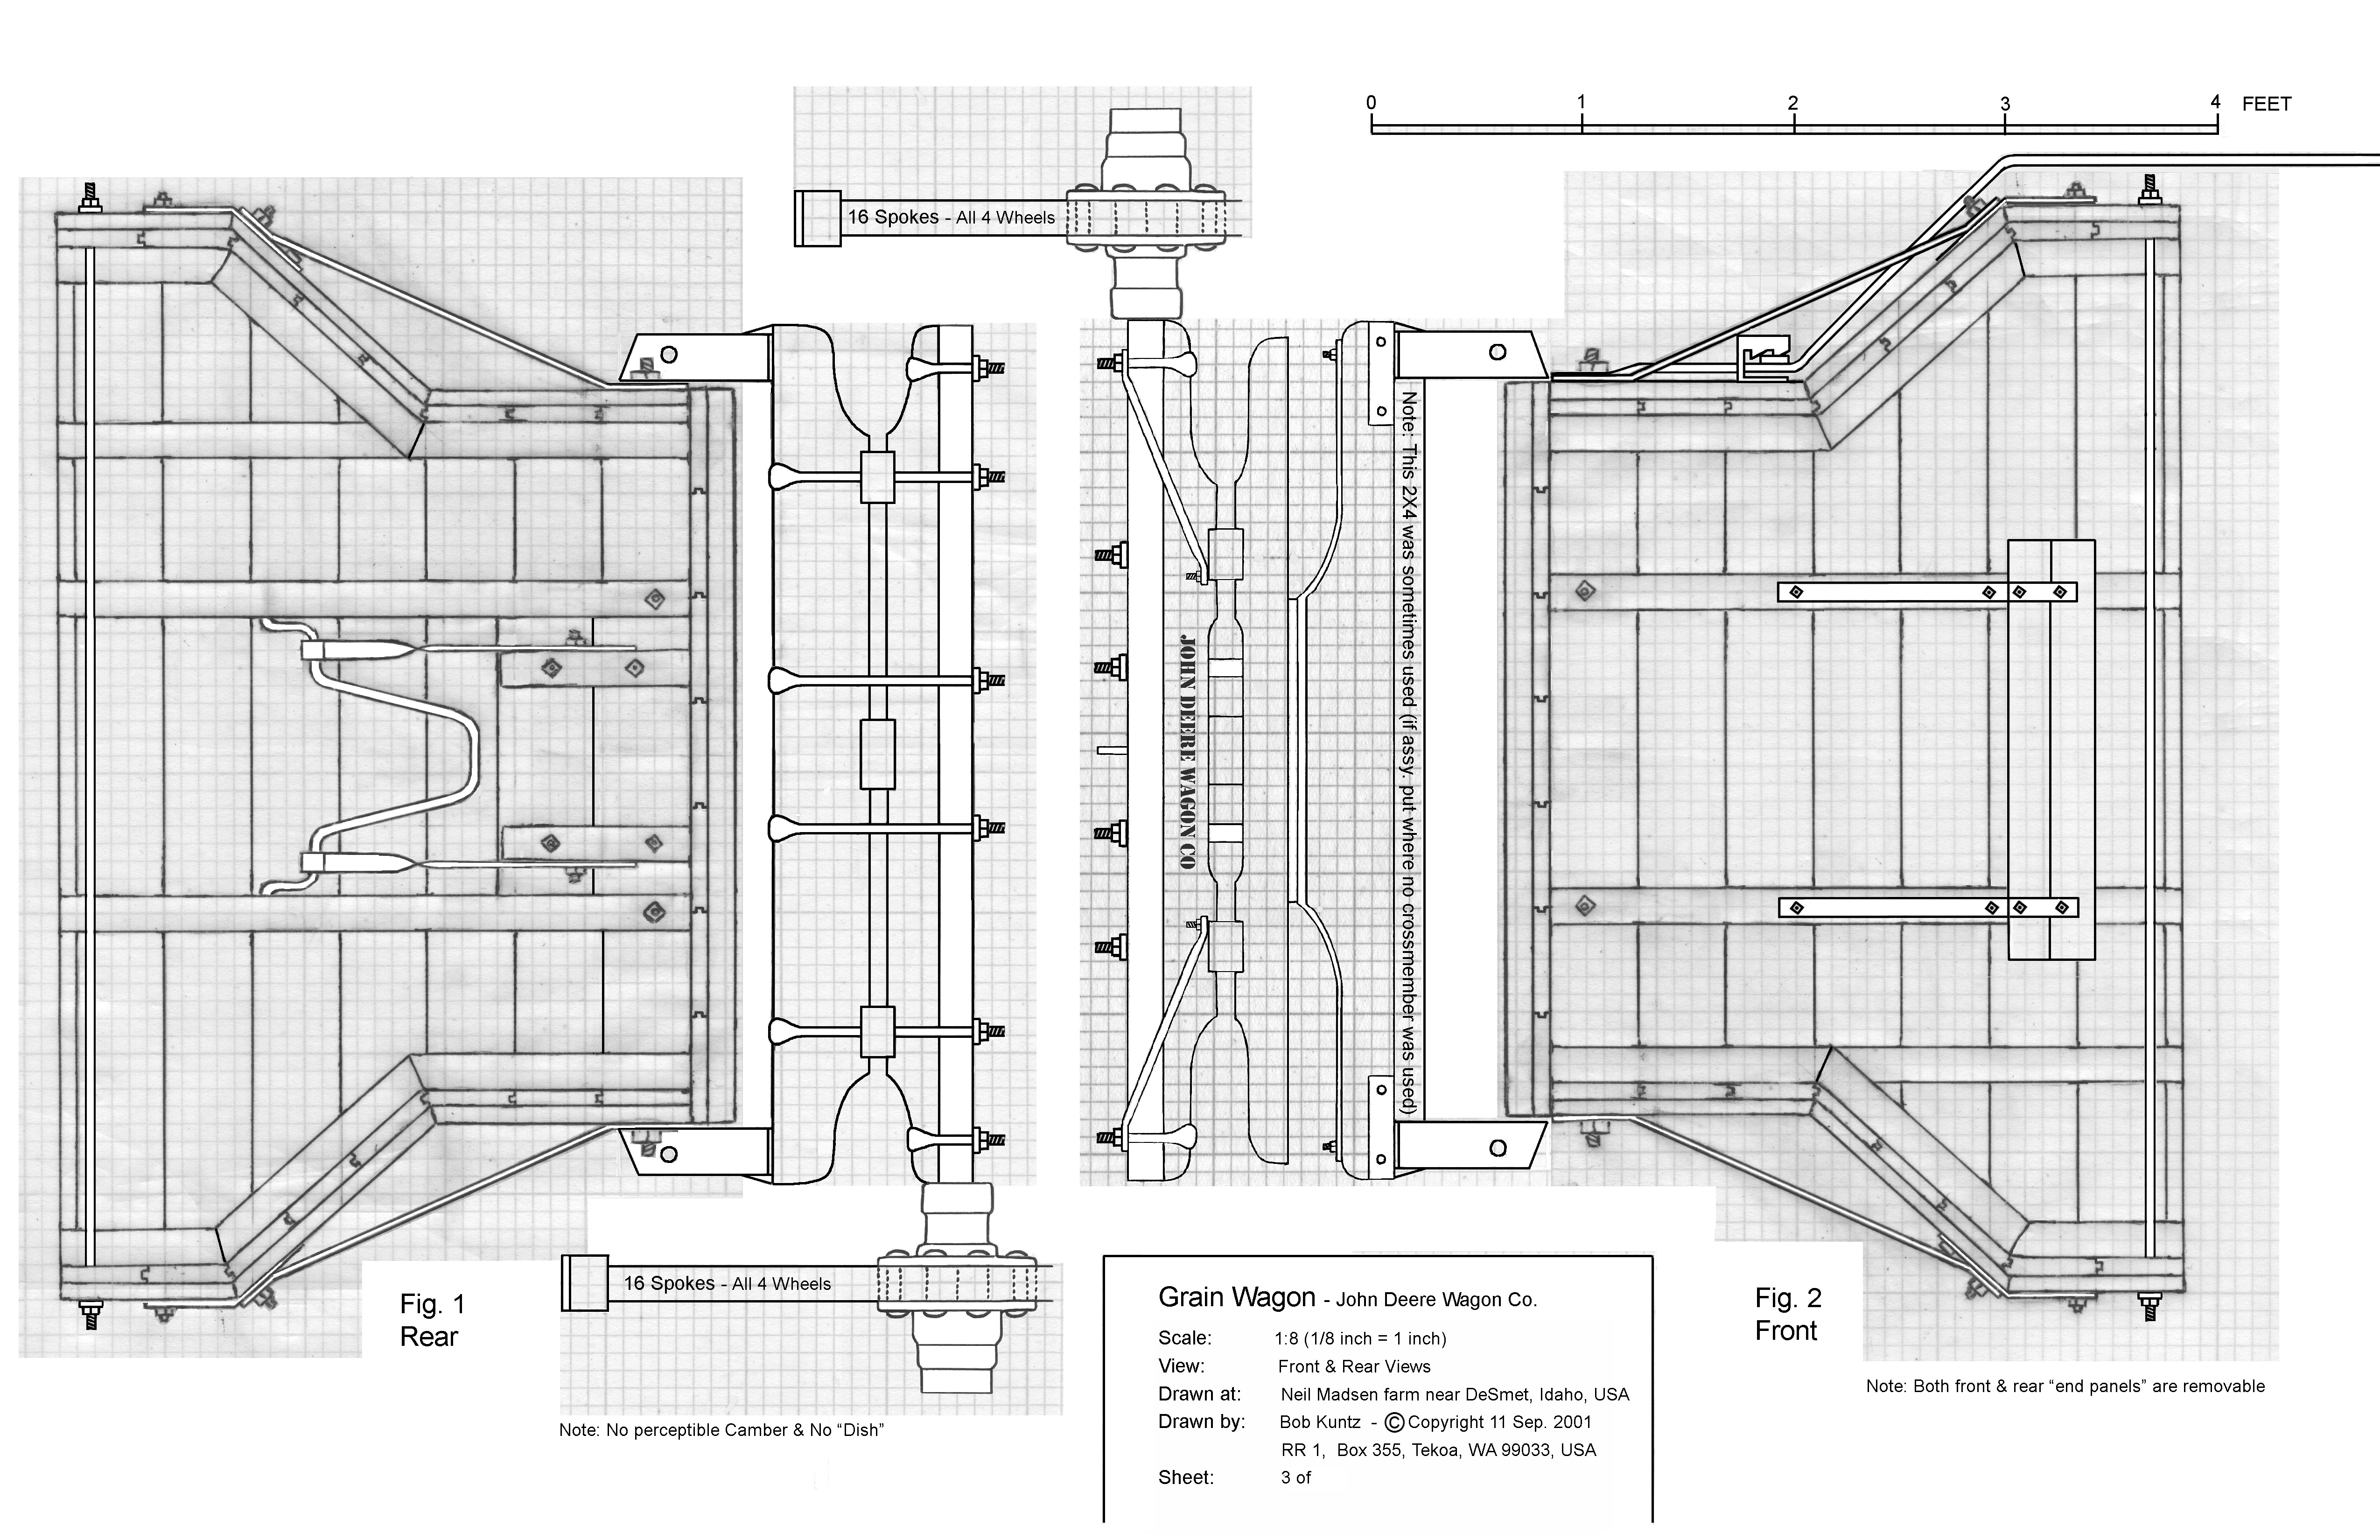 John Deere Wagon Co - Grain Wagon Plans - Sheet 3 